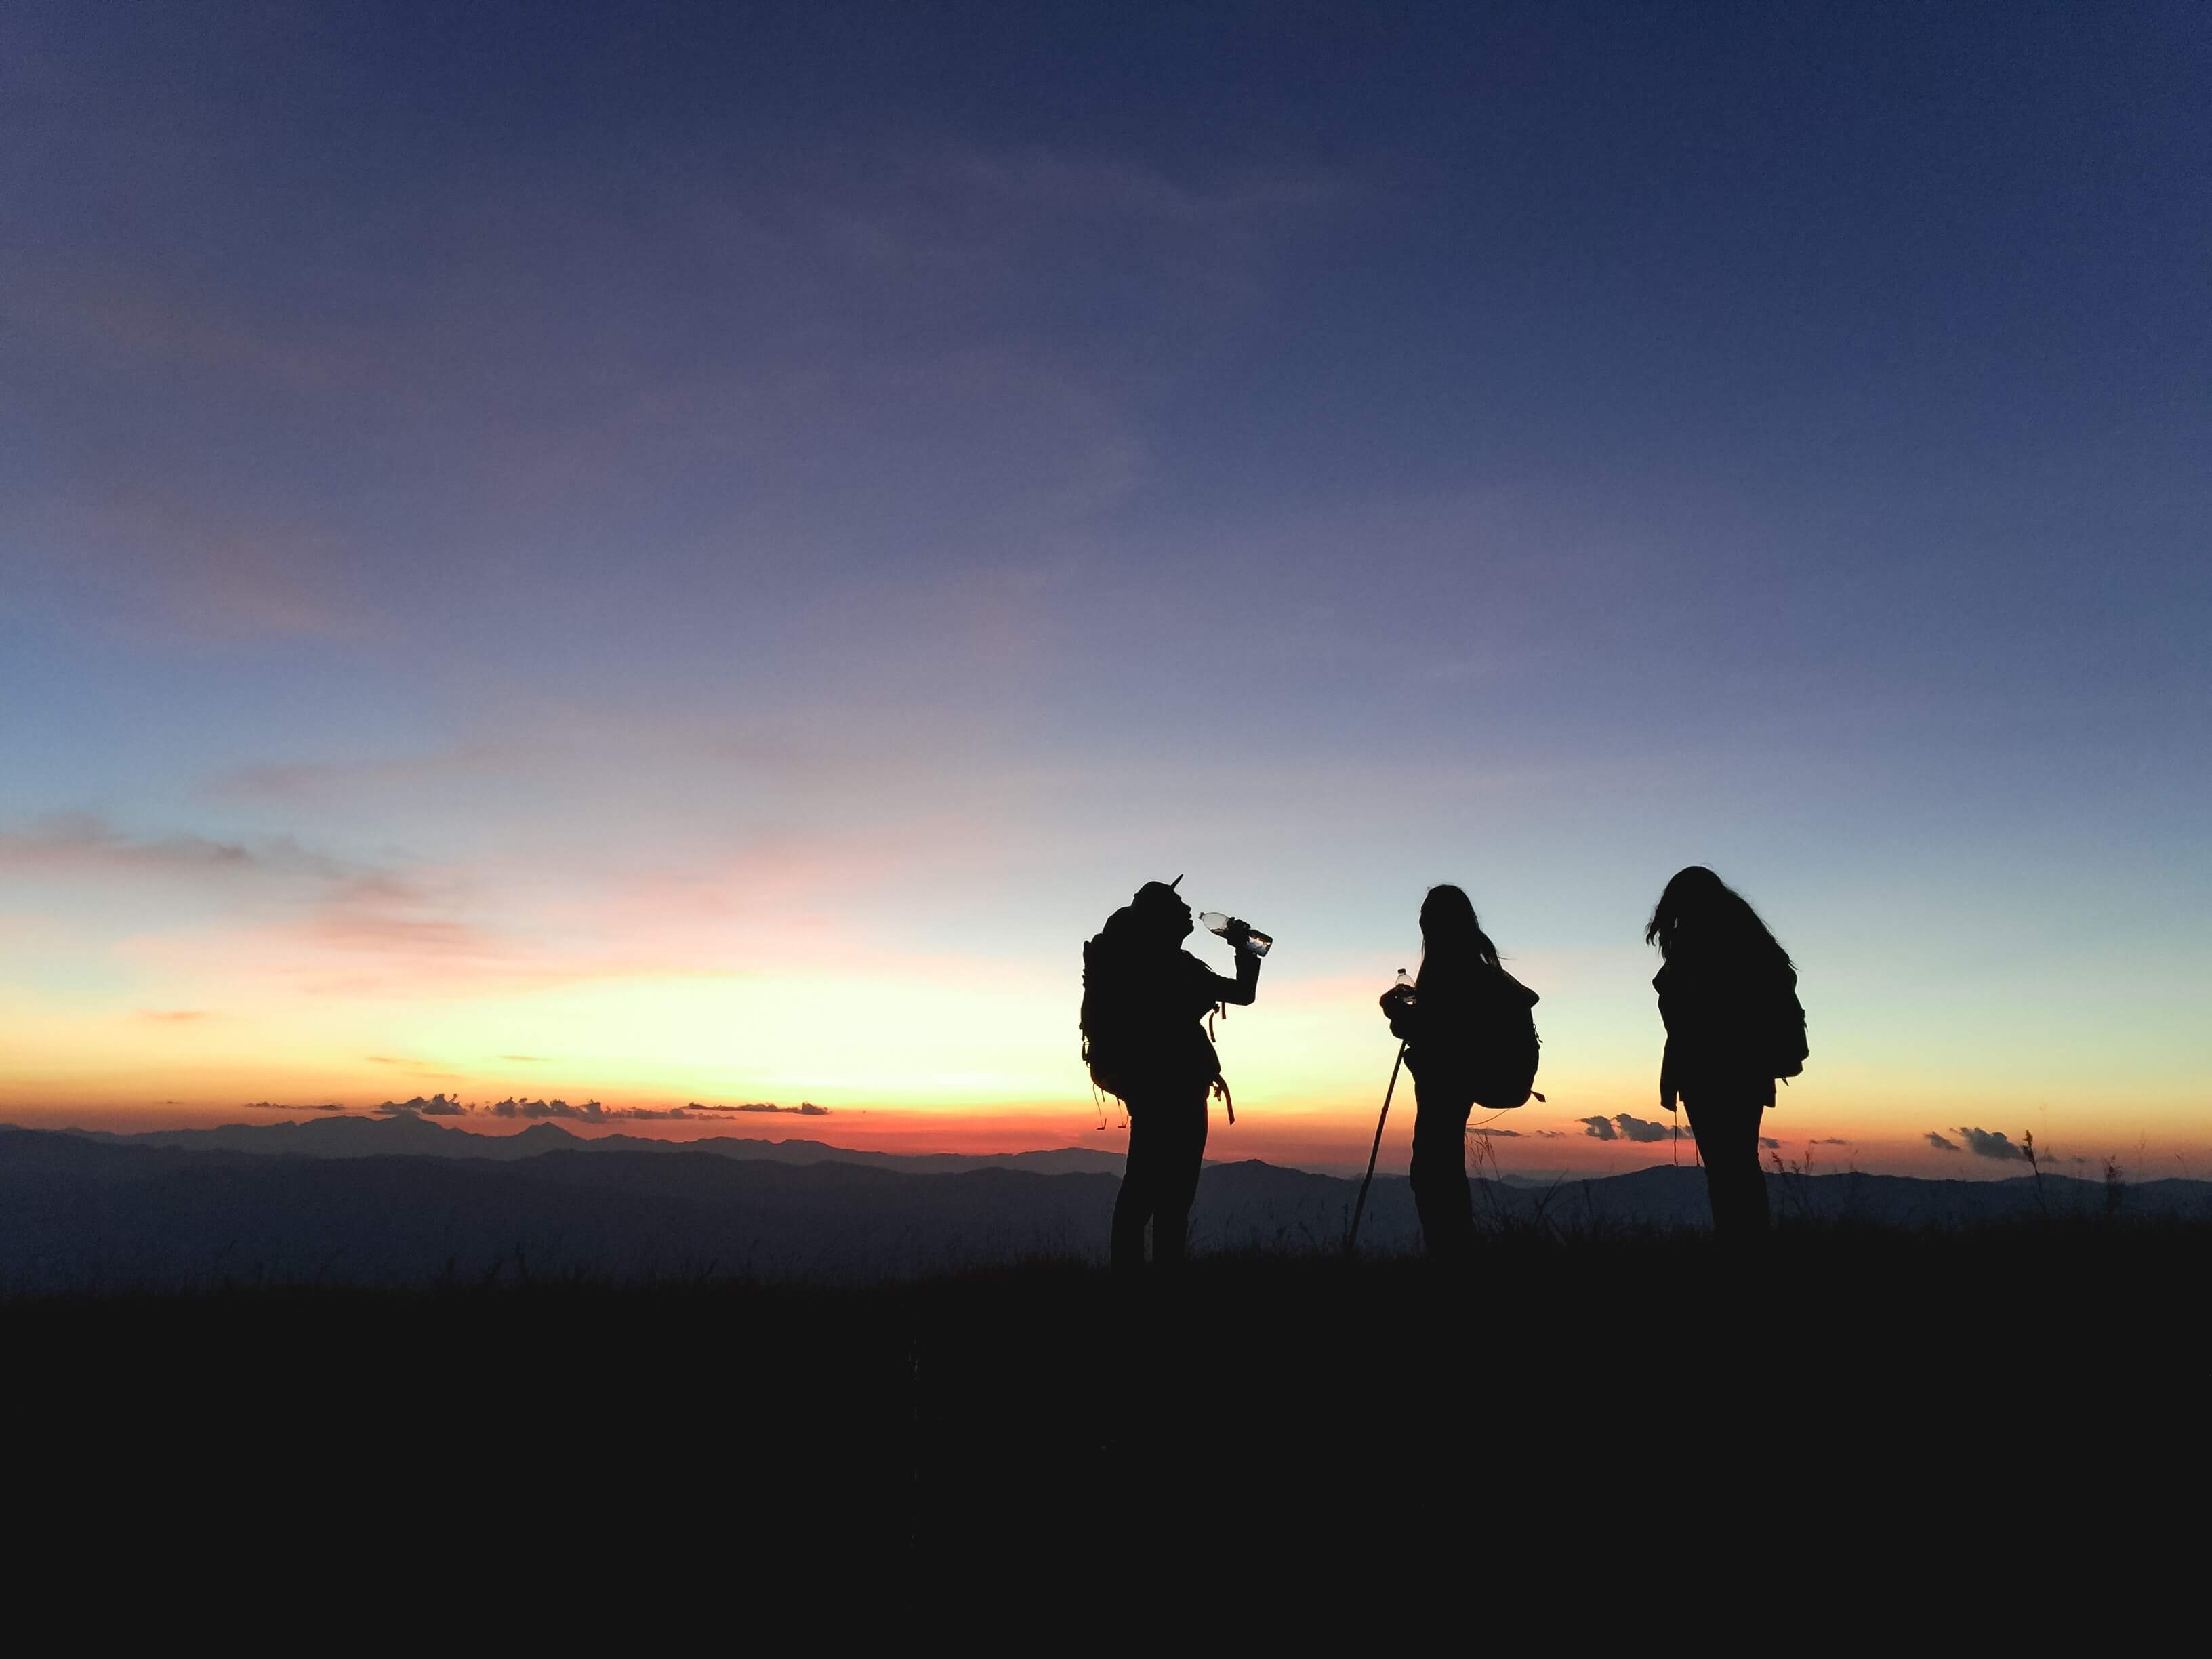 Silhouette of three people on hike